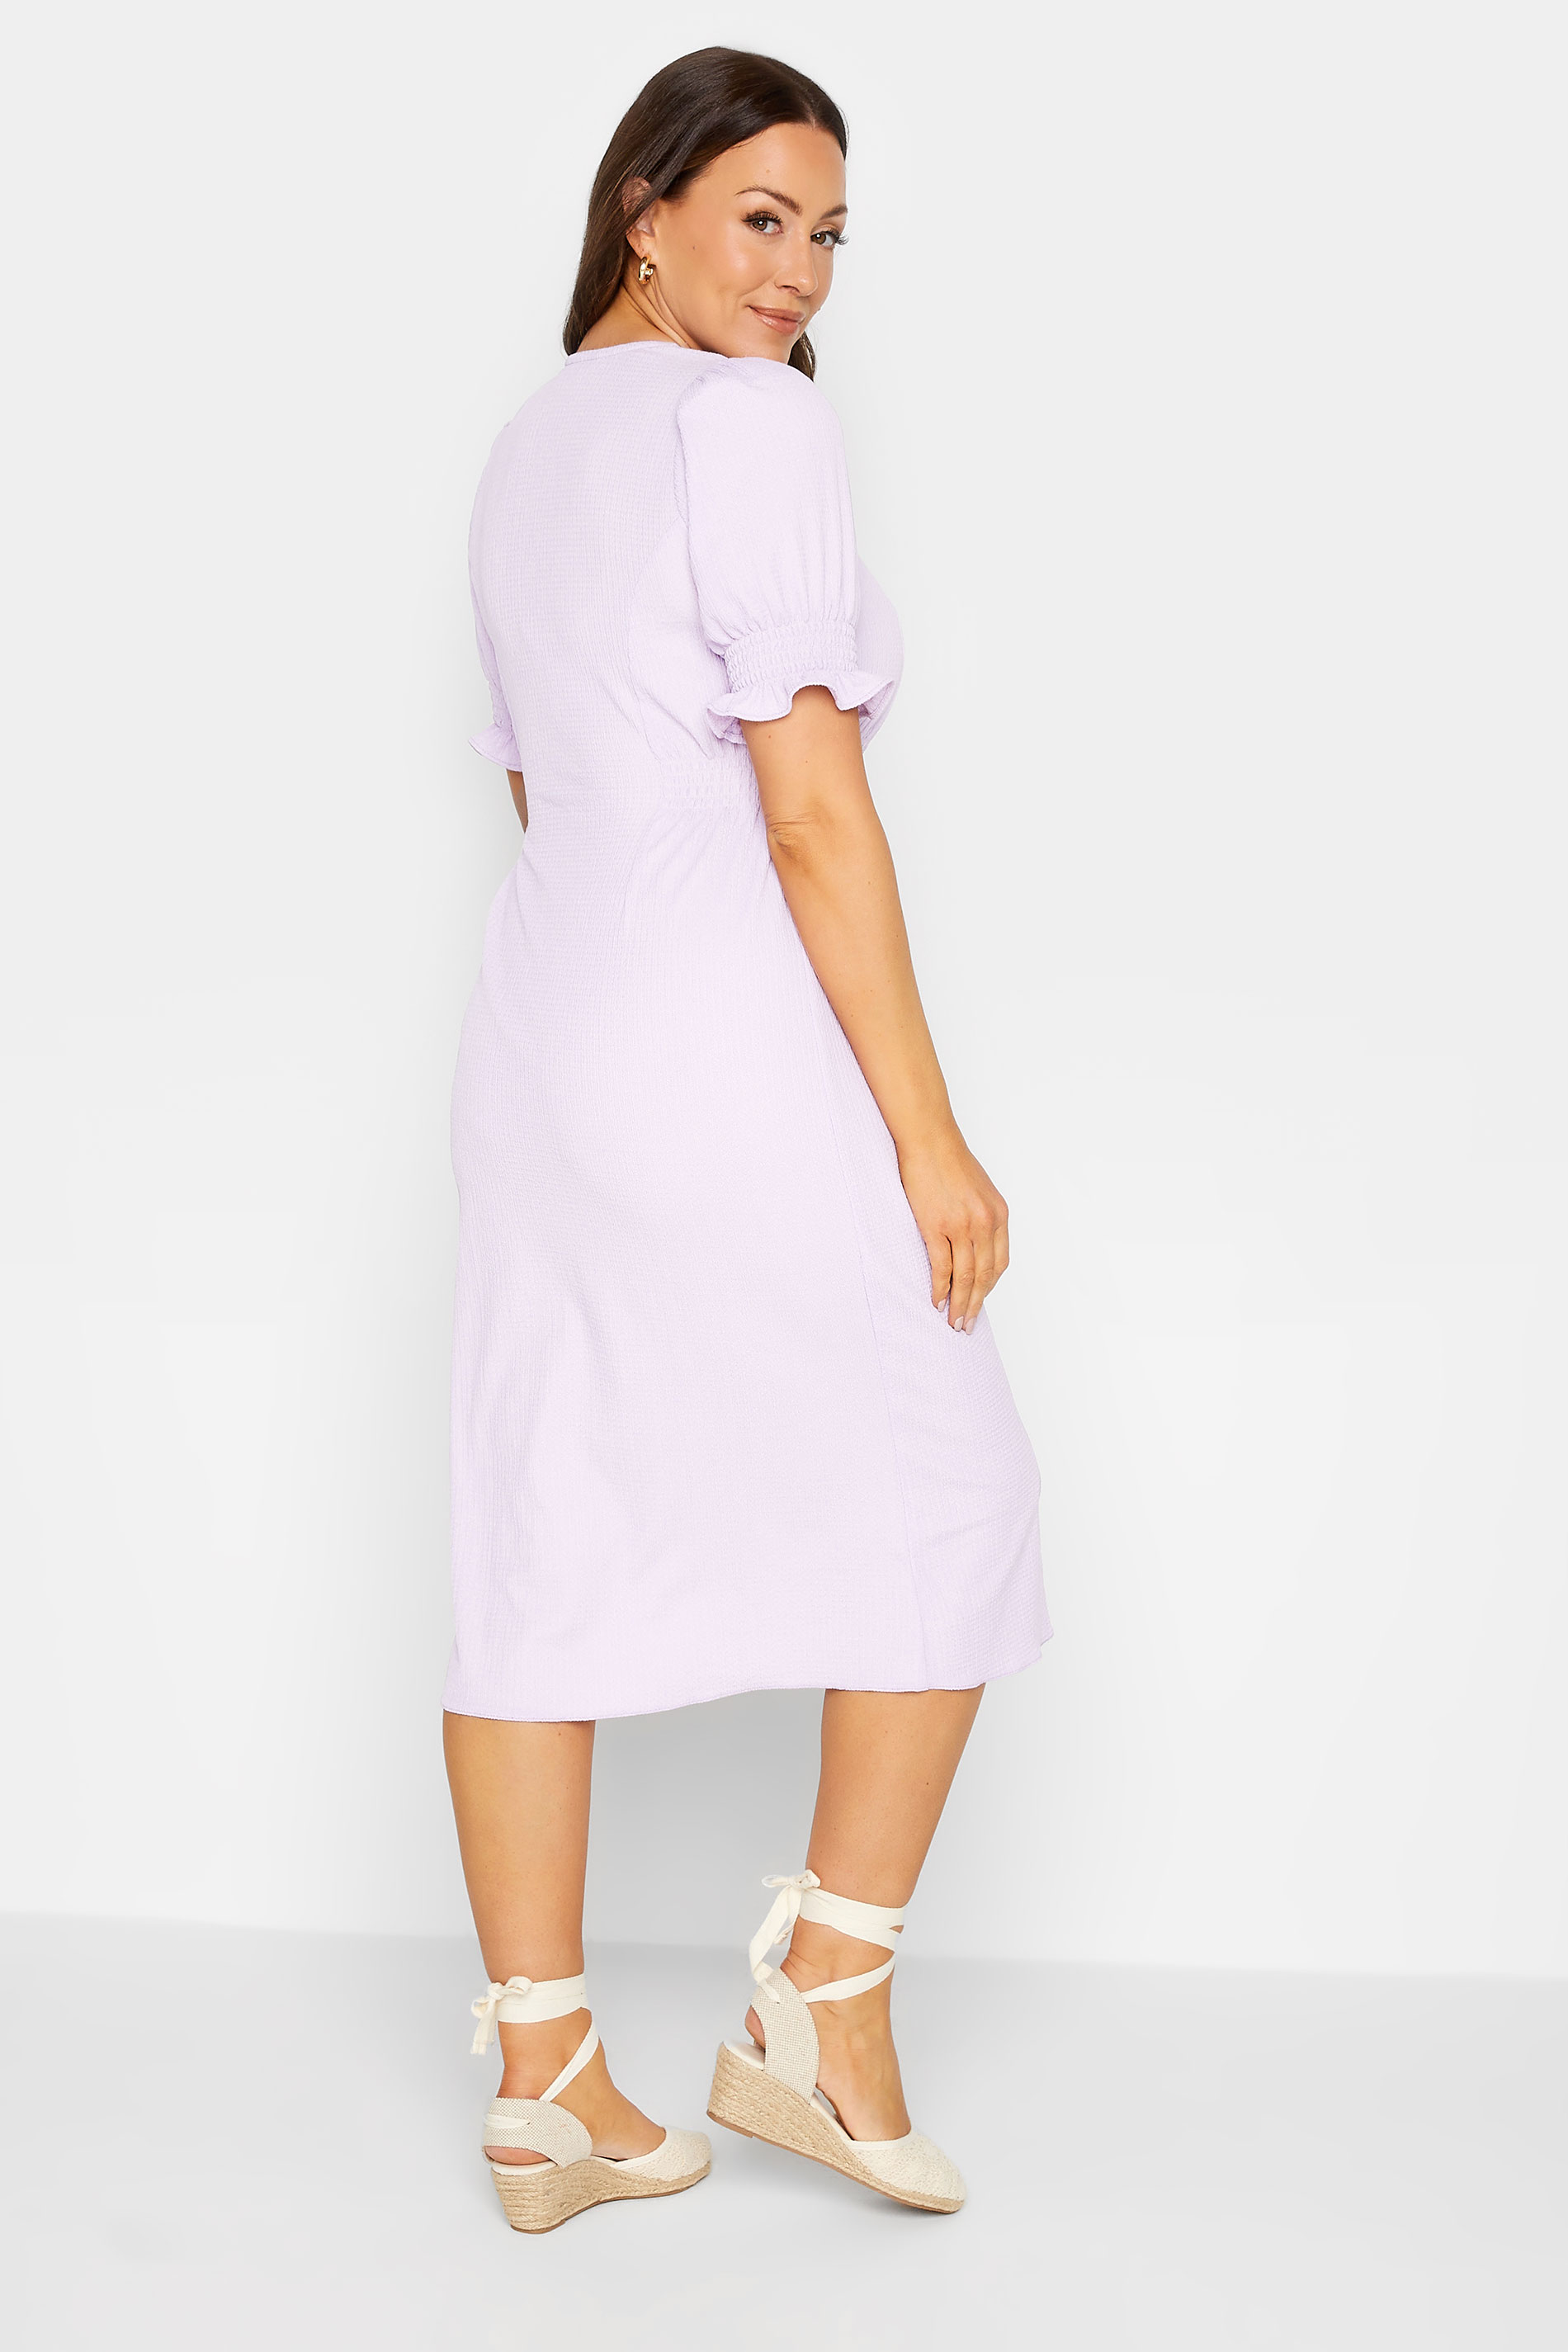 M&Co Purple Textured Button Through Dress | M&Co 3